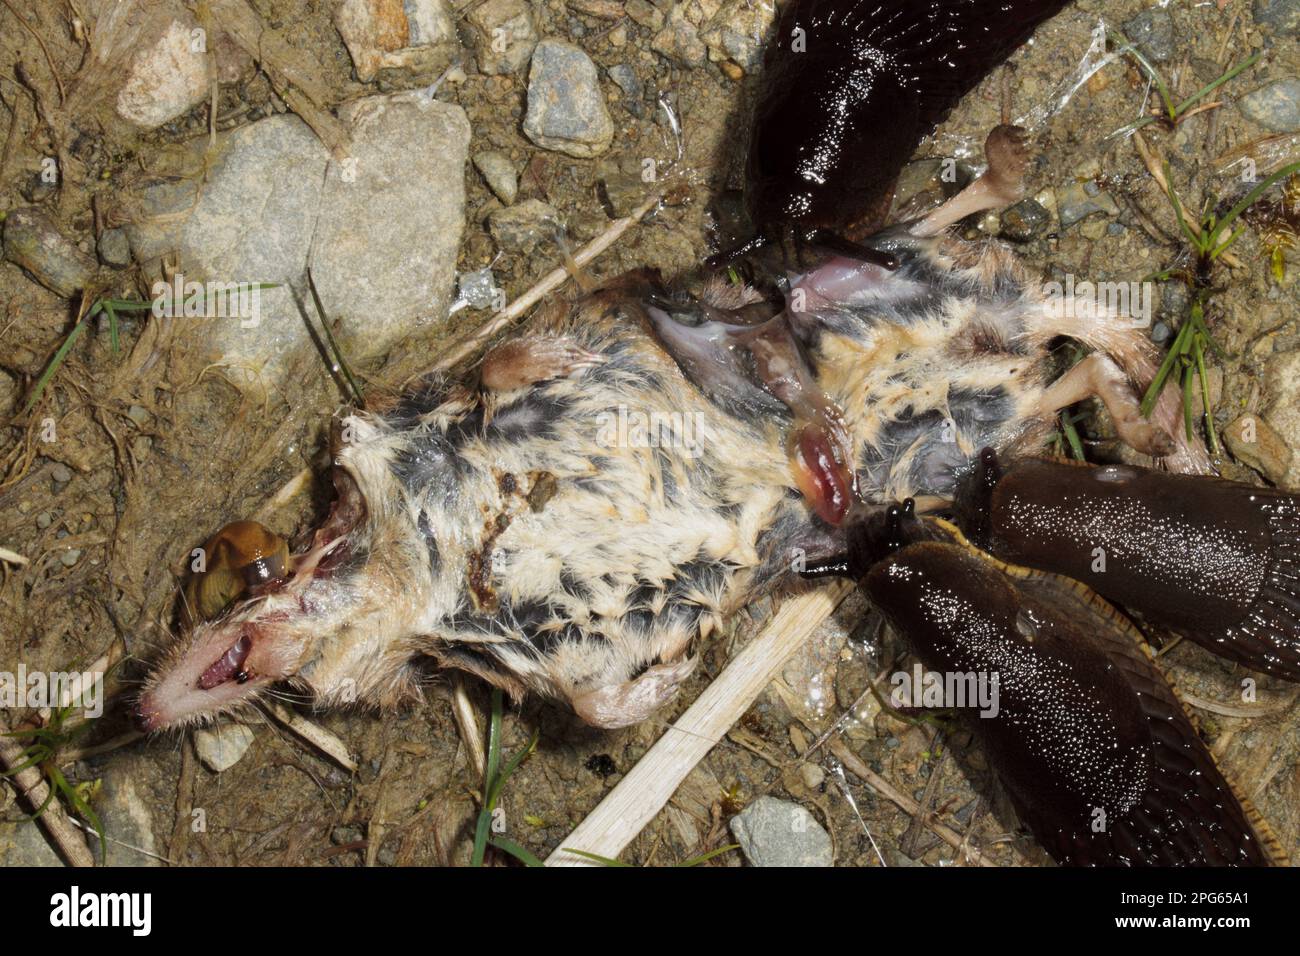 Great black slug (Arion ater) three adults feeding on the corpse of a common shrew (Sorex araneus), Powys, Wales, United Kingdom Stock Photo